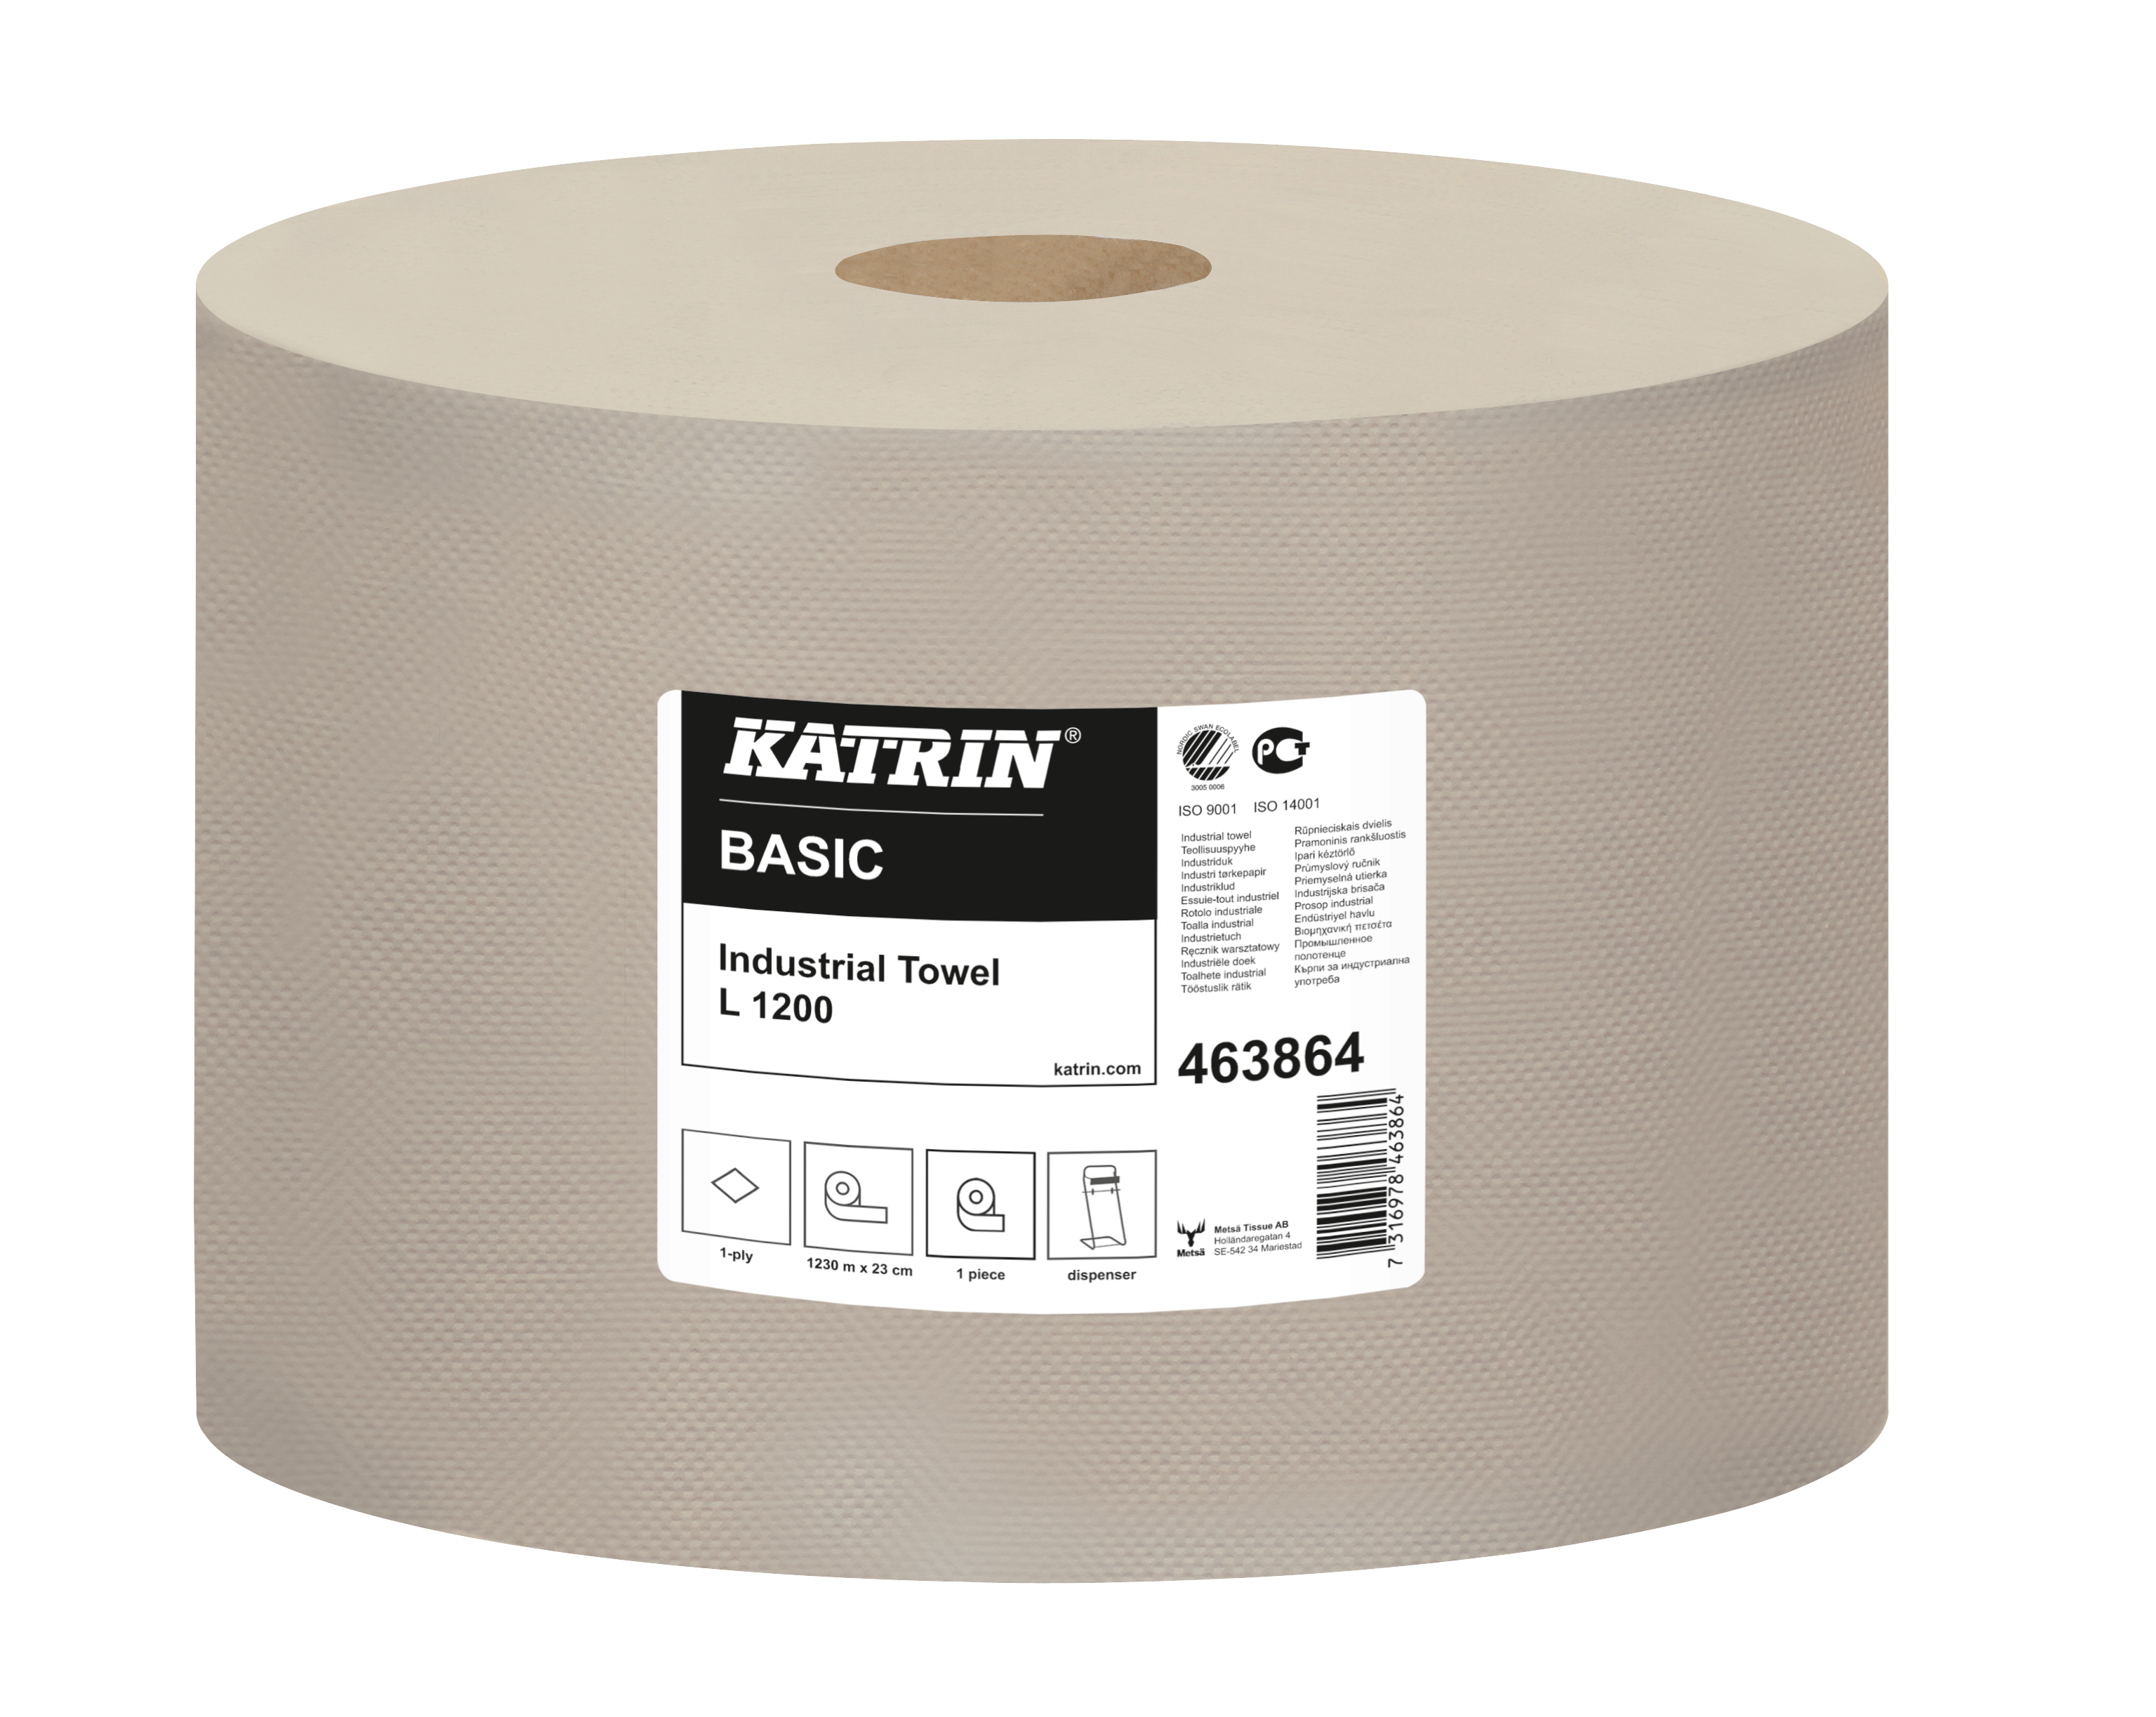 Katrin Basic Industrial Towel L 1200